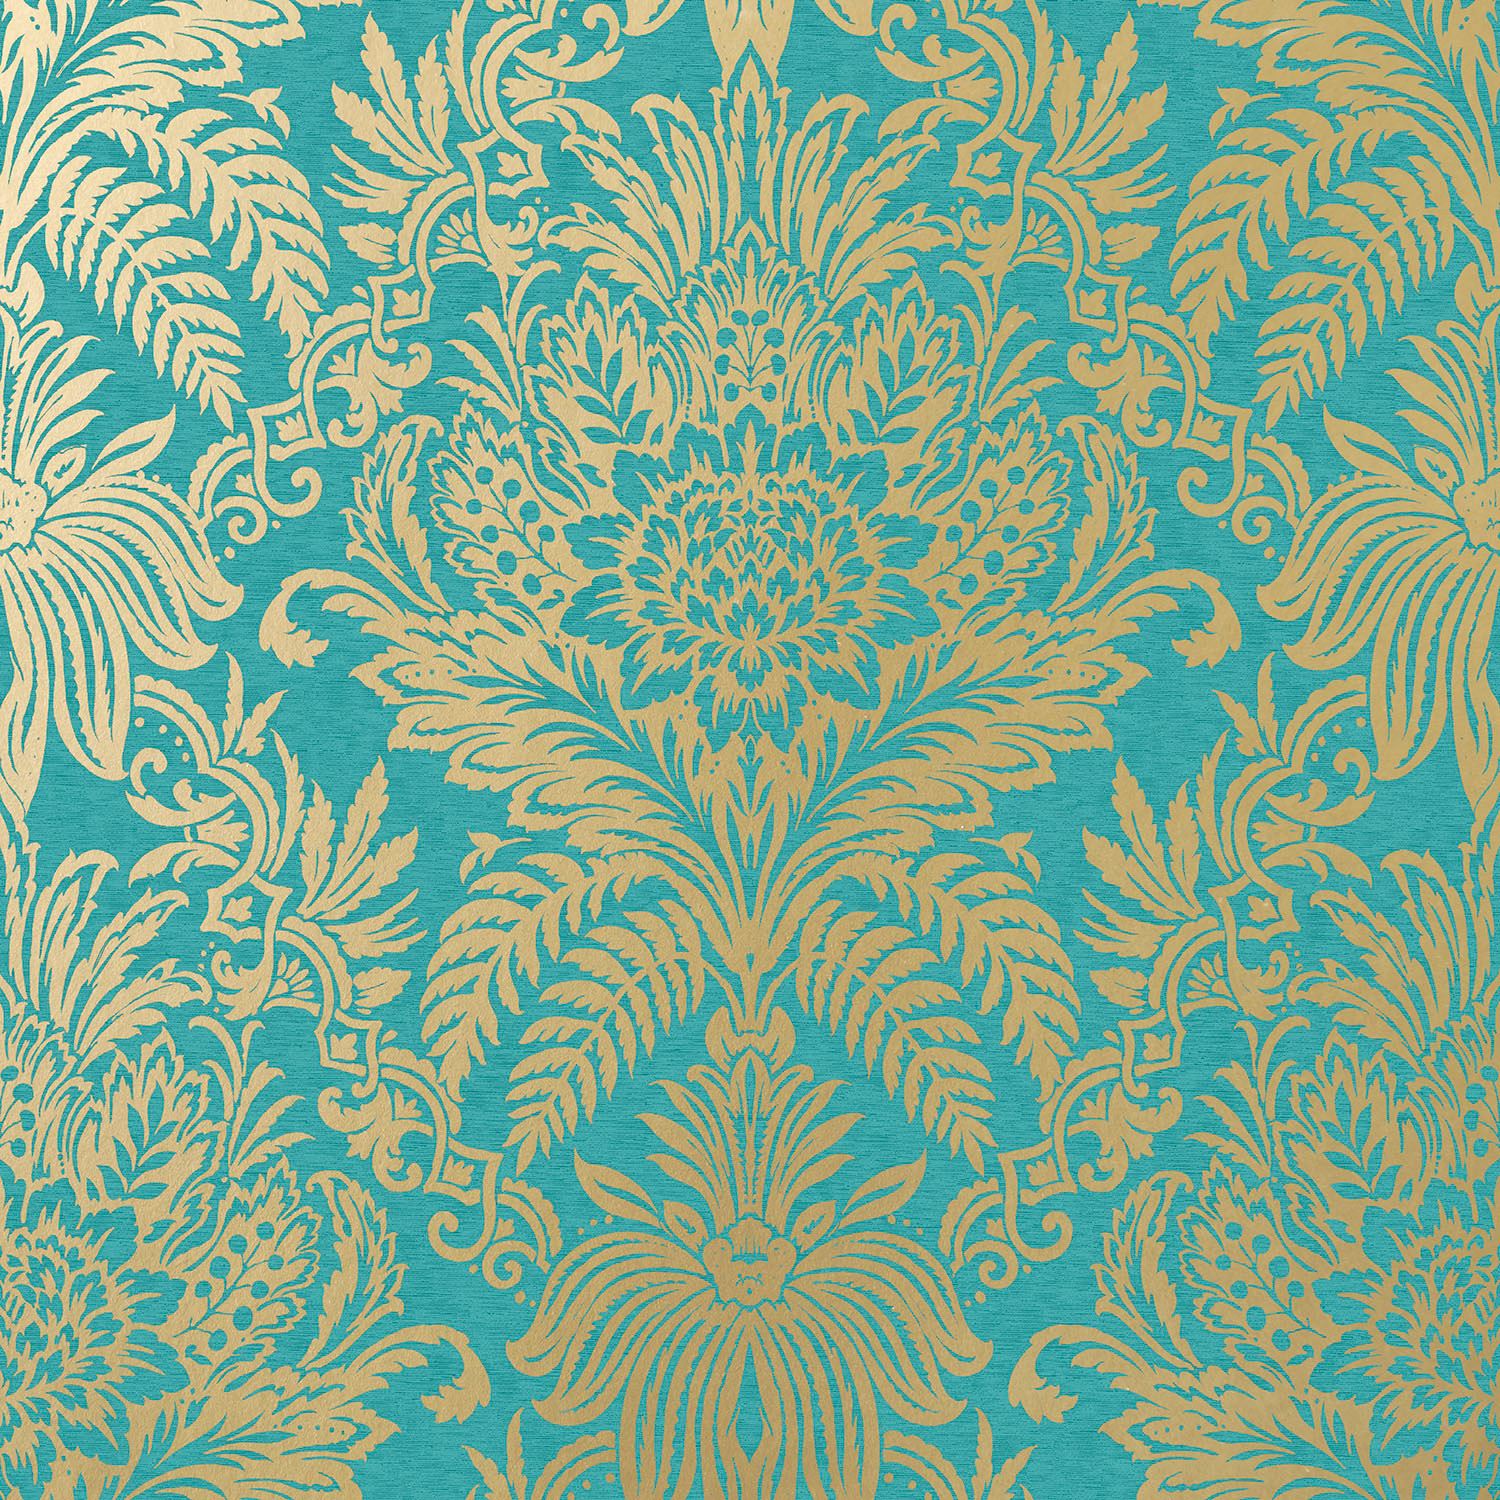 teal wallpaper designs,aqua,pattern,blue,turquoise,green